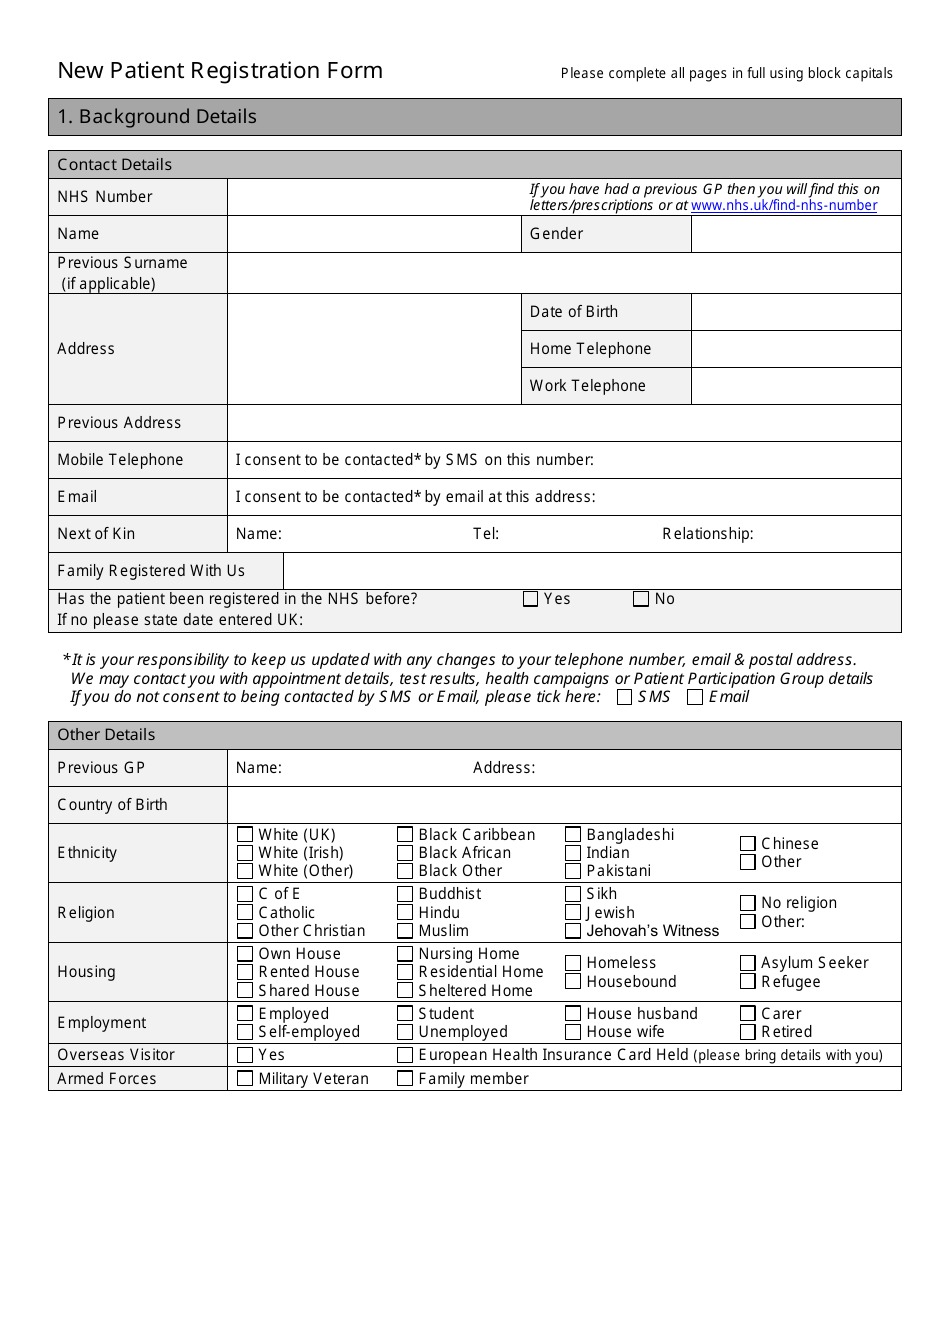 New Patient Registration Form - United Kingdom, Page 1